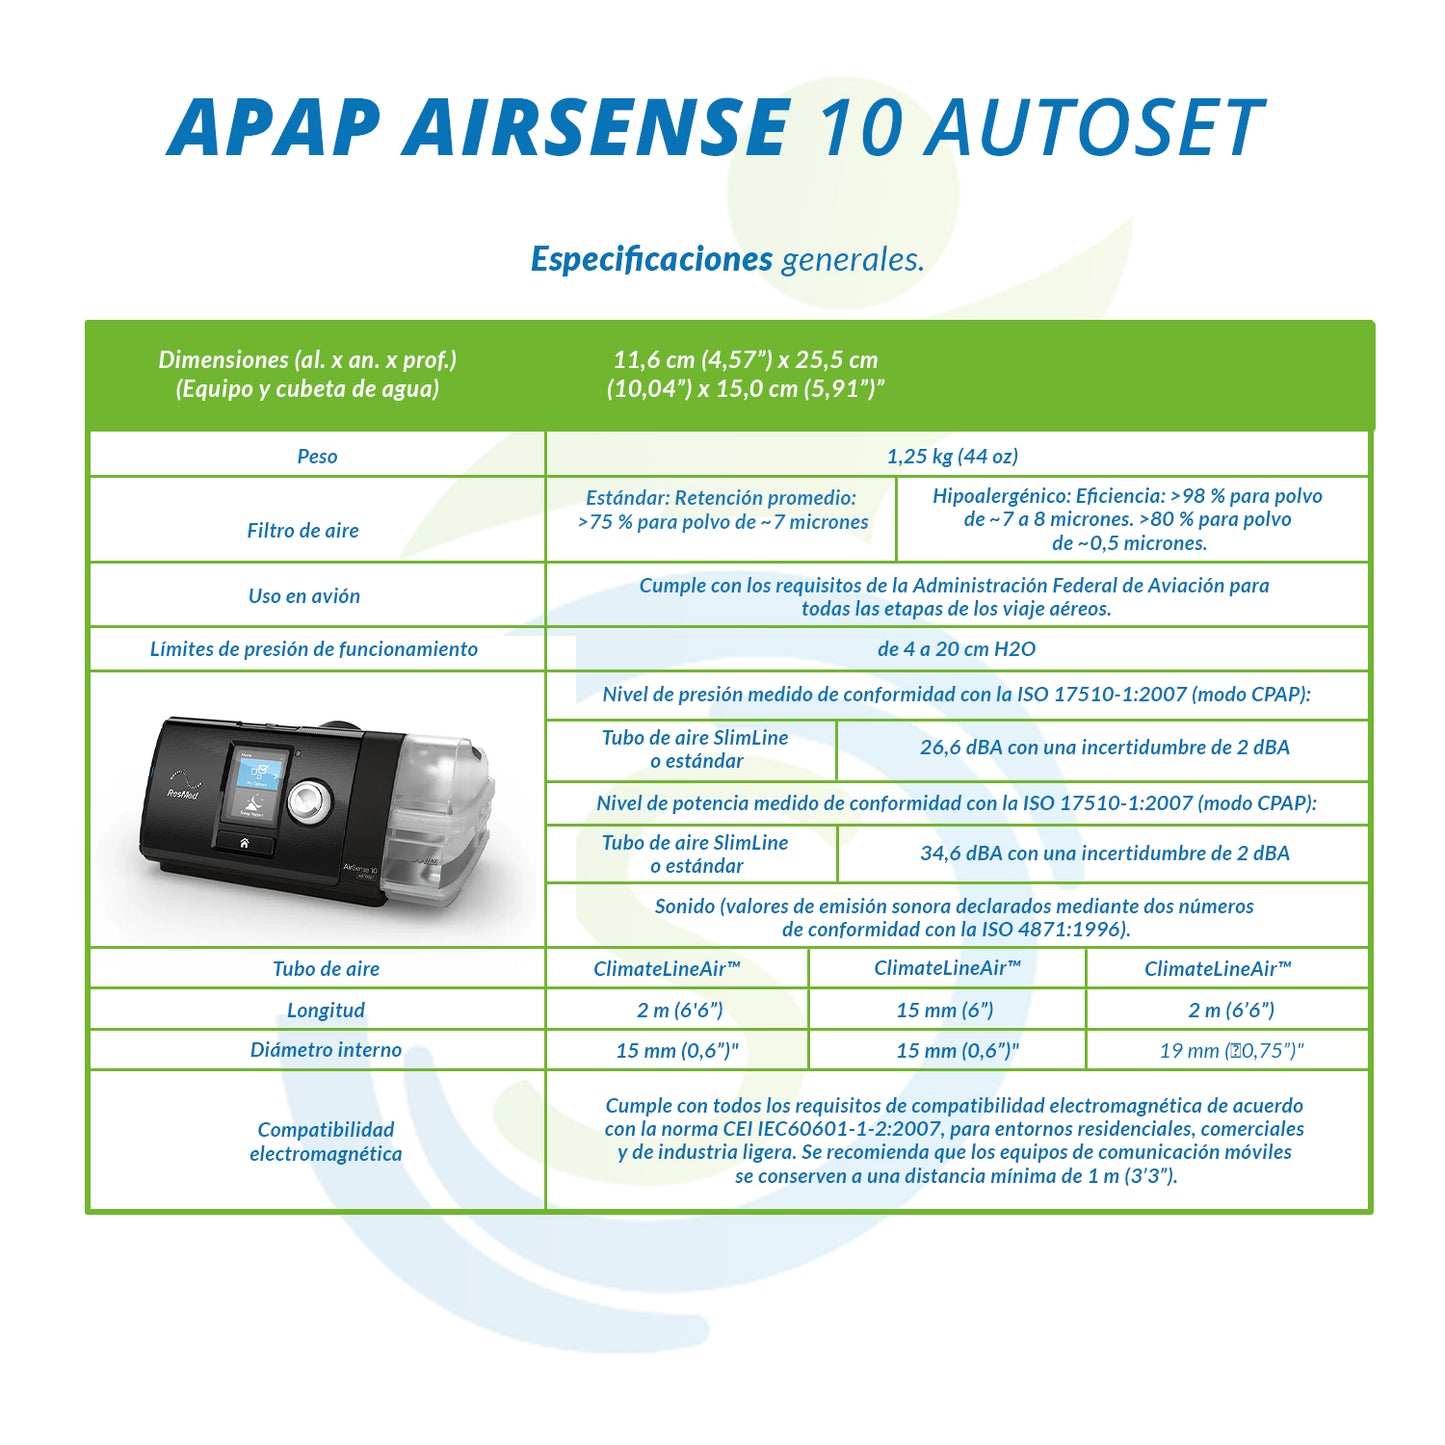 APAP airsense 10 autoset